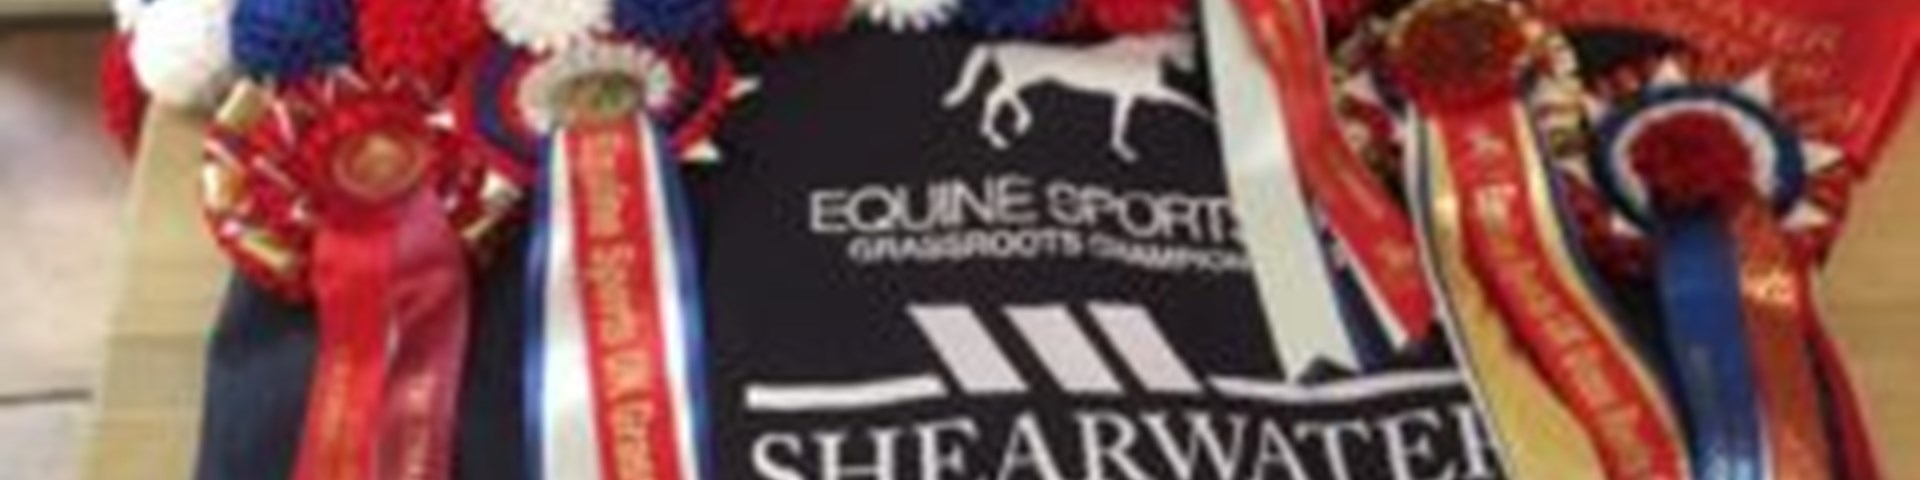 shearwater insurance sponsor equine sports uk